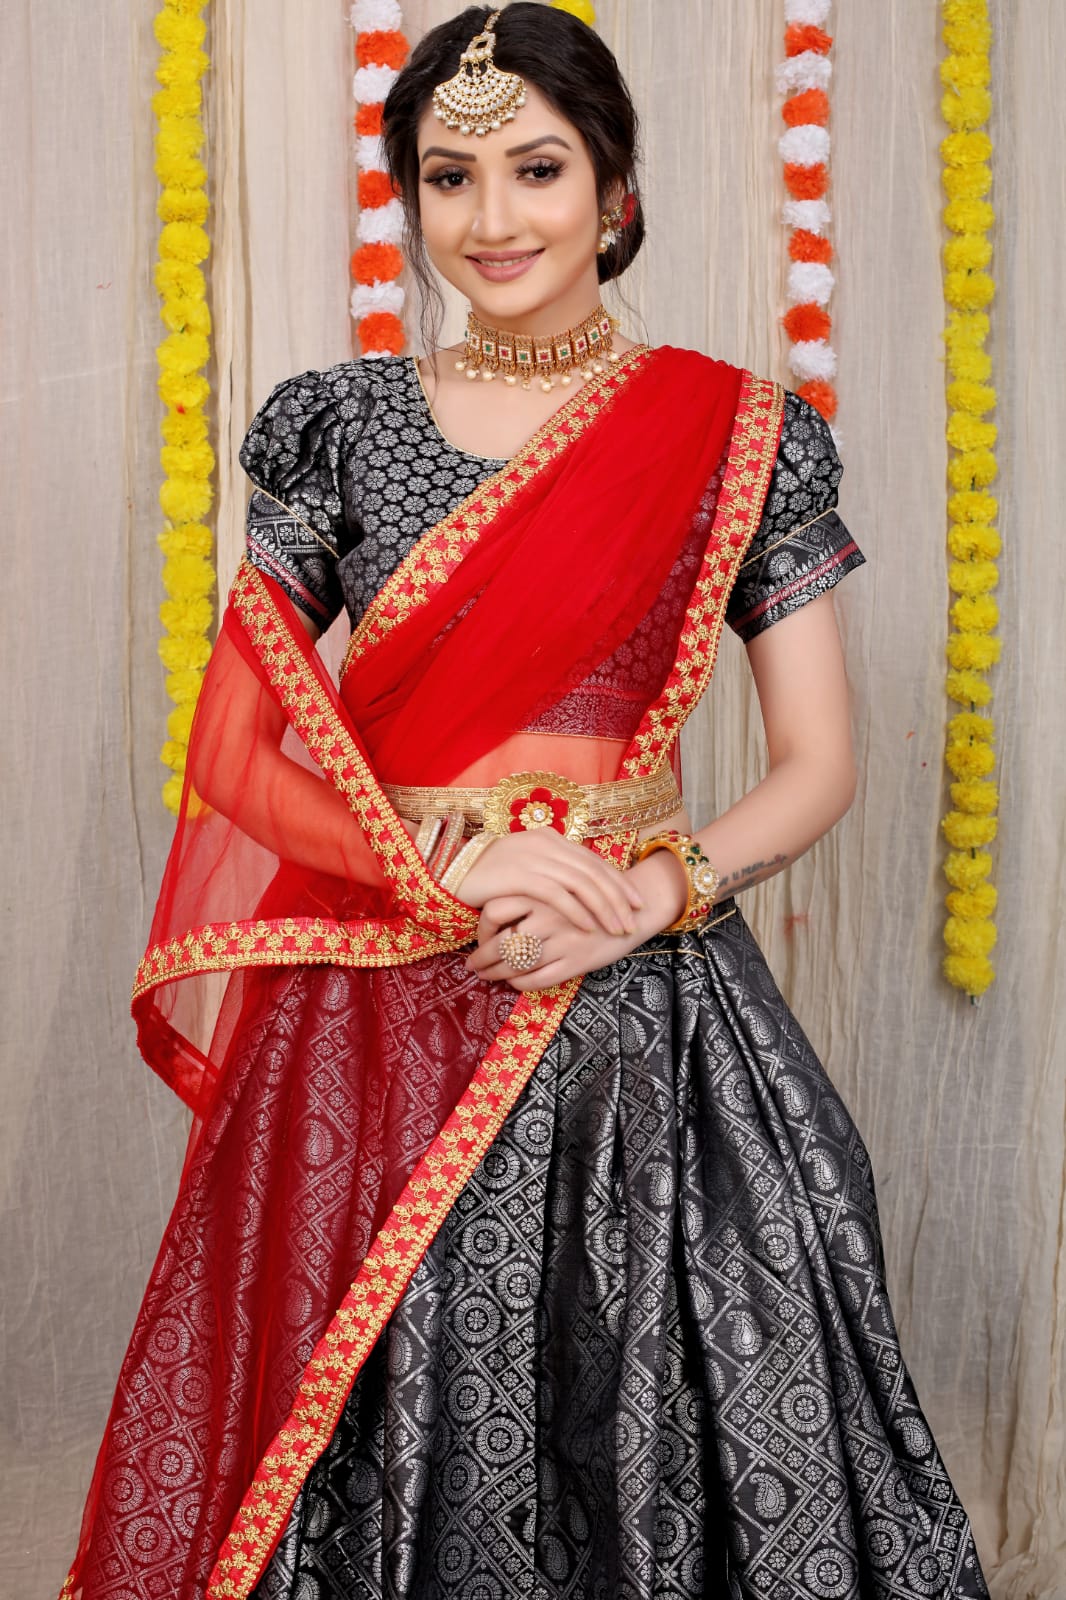 Red Georgette Ruffle Border Sari Party Wear Lehenga Saree Bollywood Style  Choli | eBay